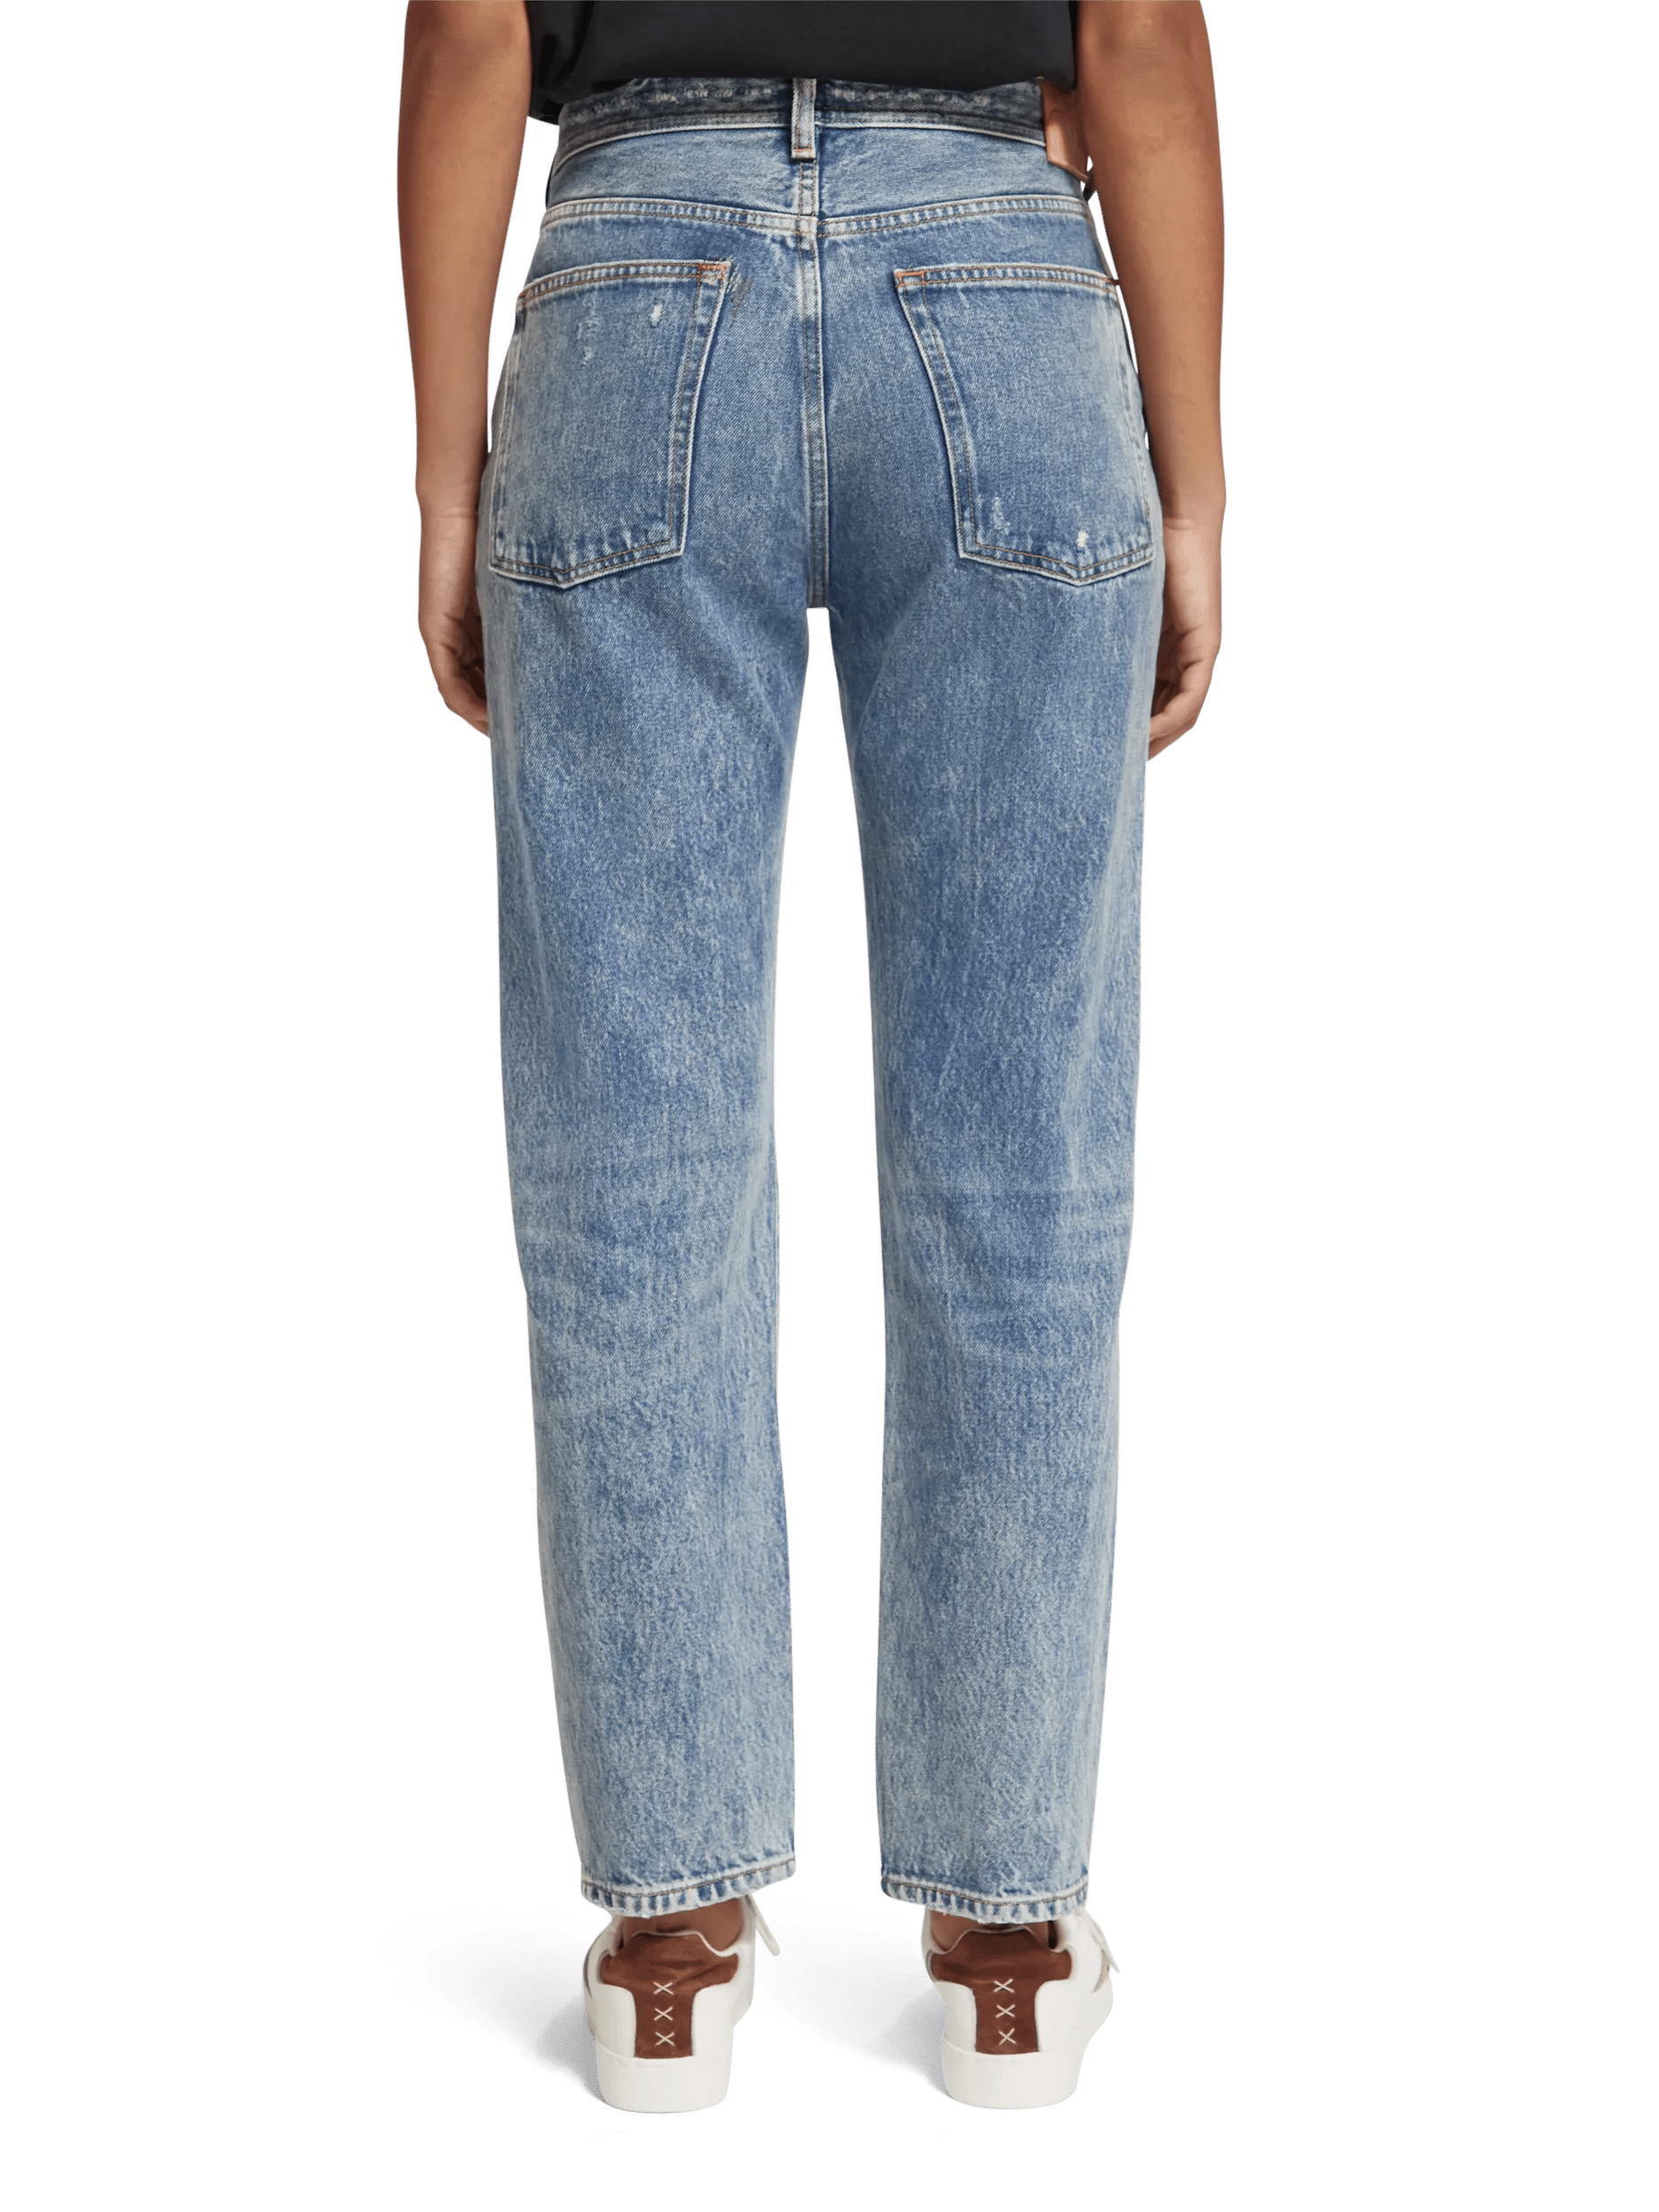 Scotch & Soda The Buzz mid-rise boyfriend fit jeans FIT-BCK